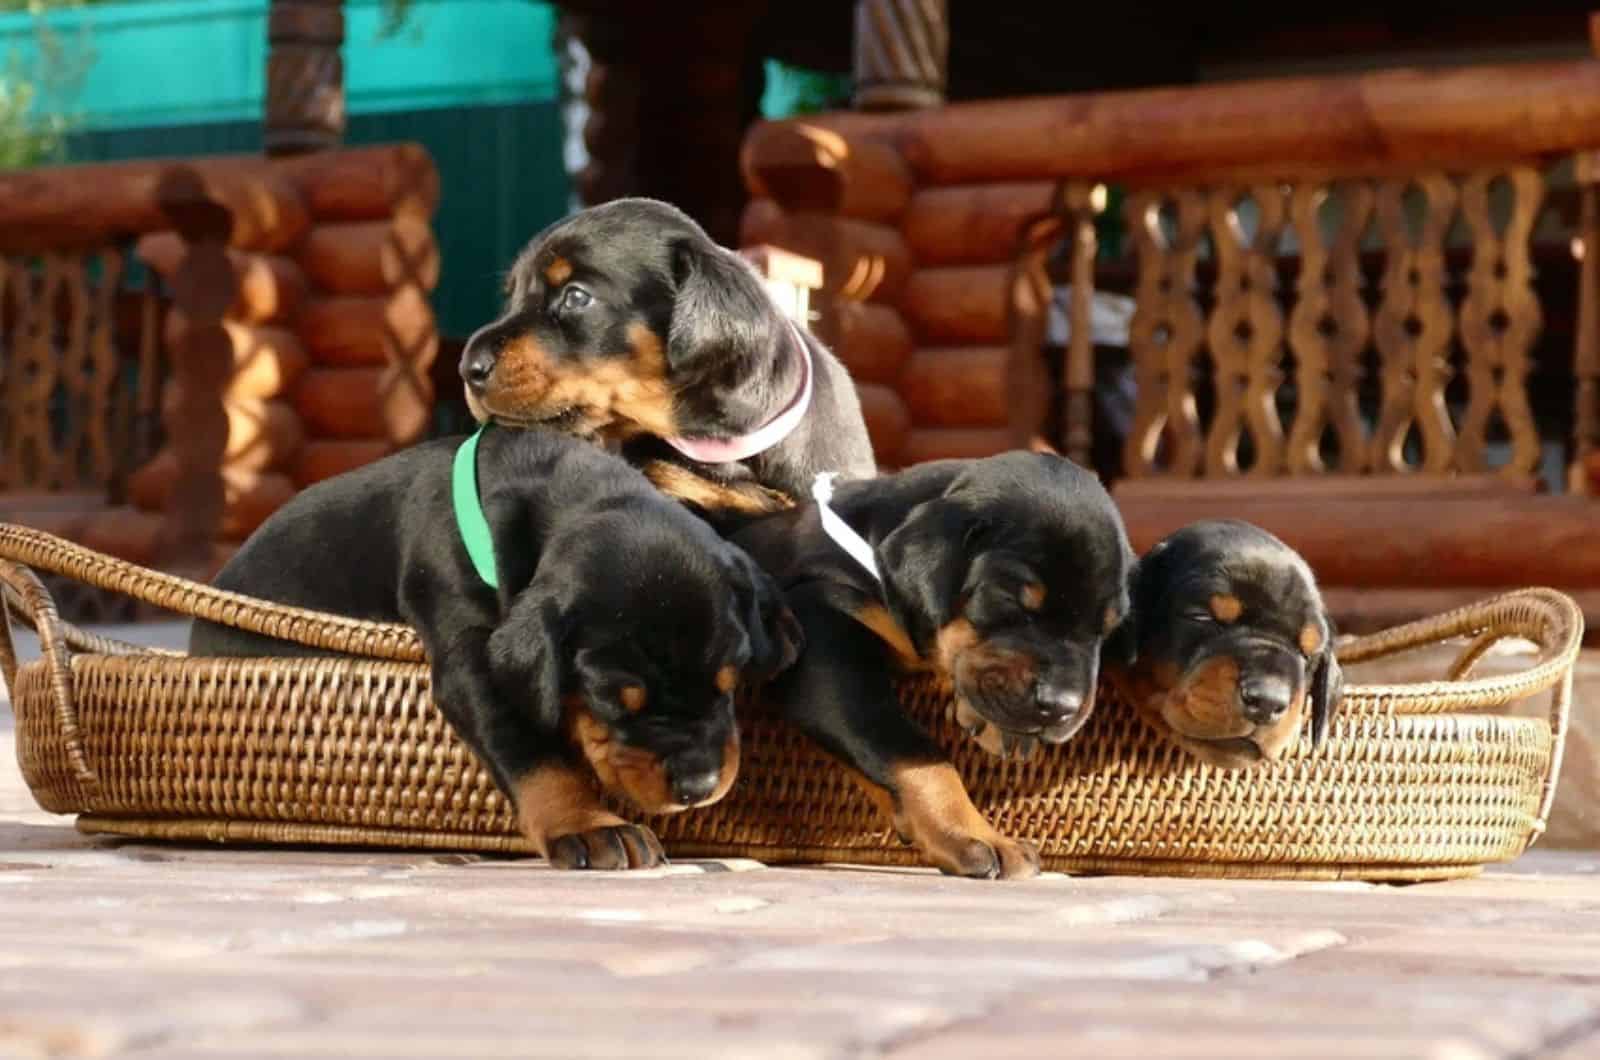 doberman pinscher puppies in the basket